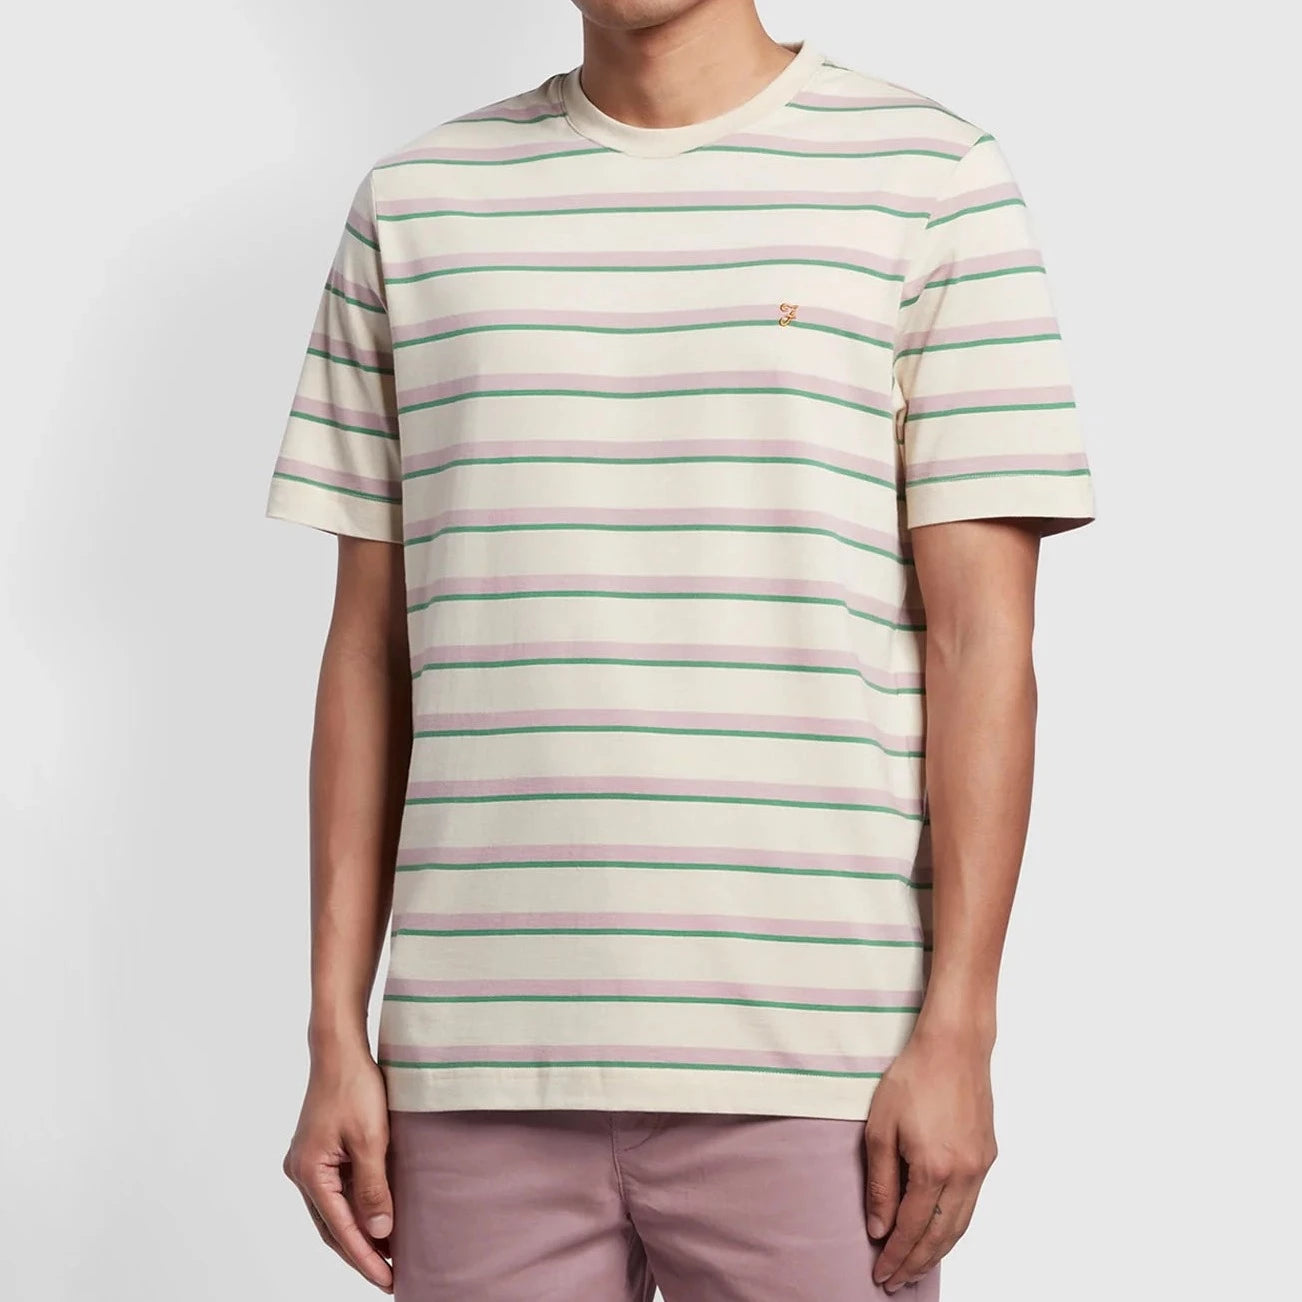 FARAH Coxsone Regular Fit Multi Stripe Short Sleeve T-Shirt in CREAM